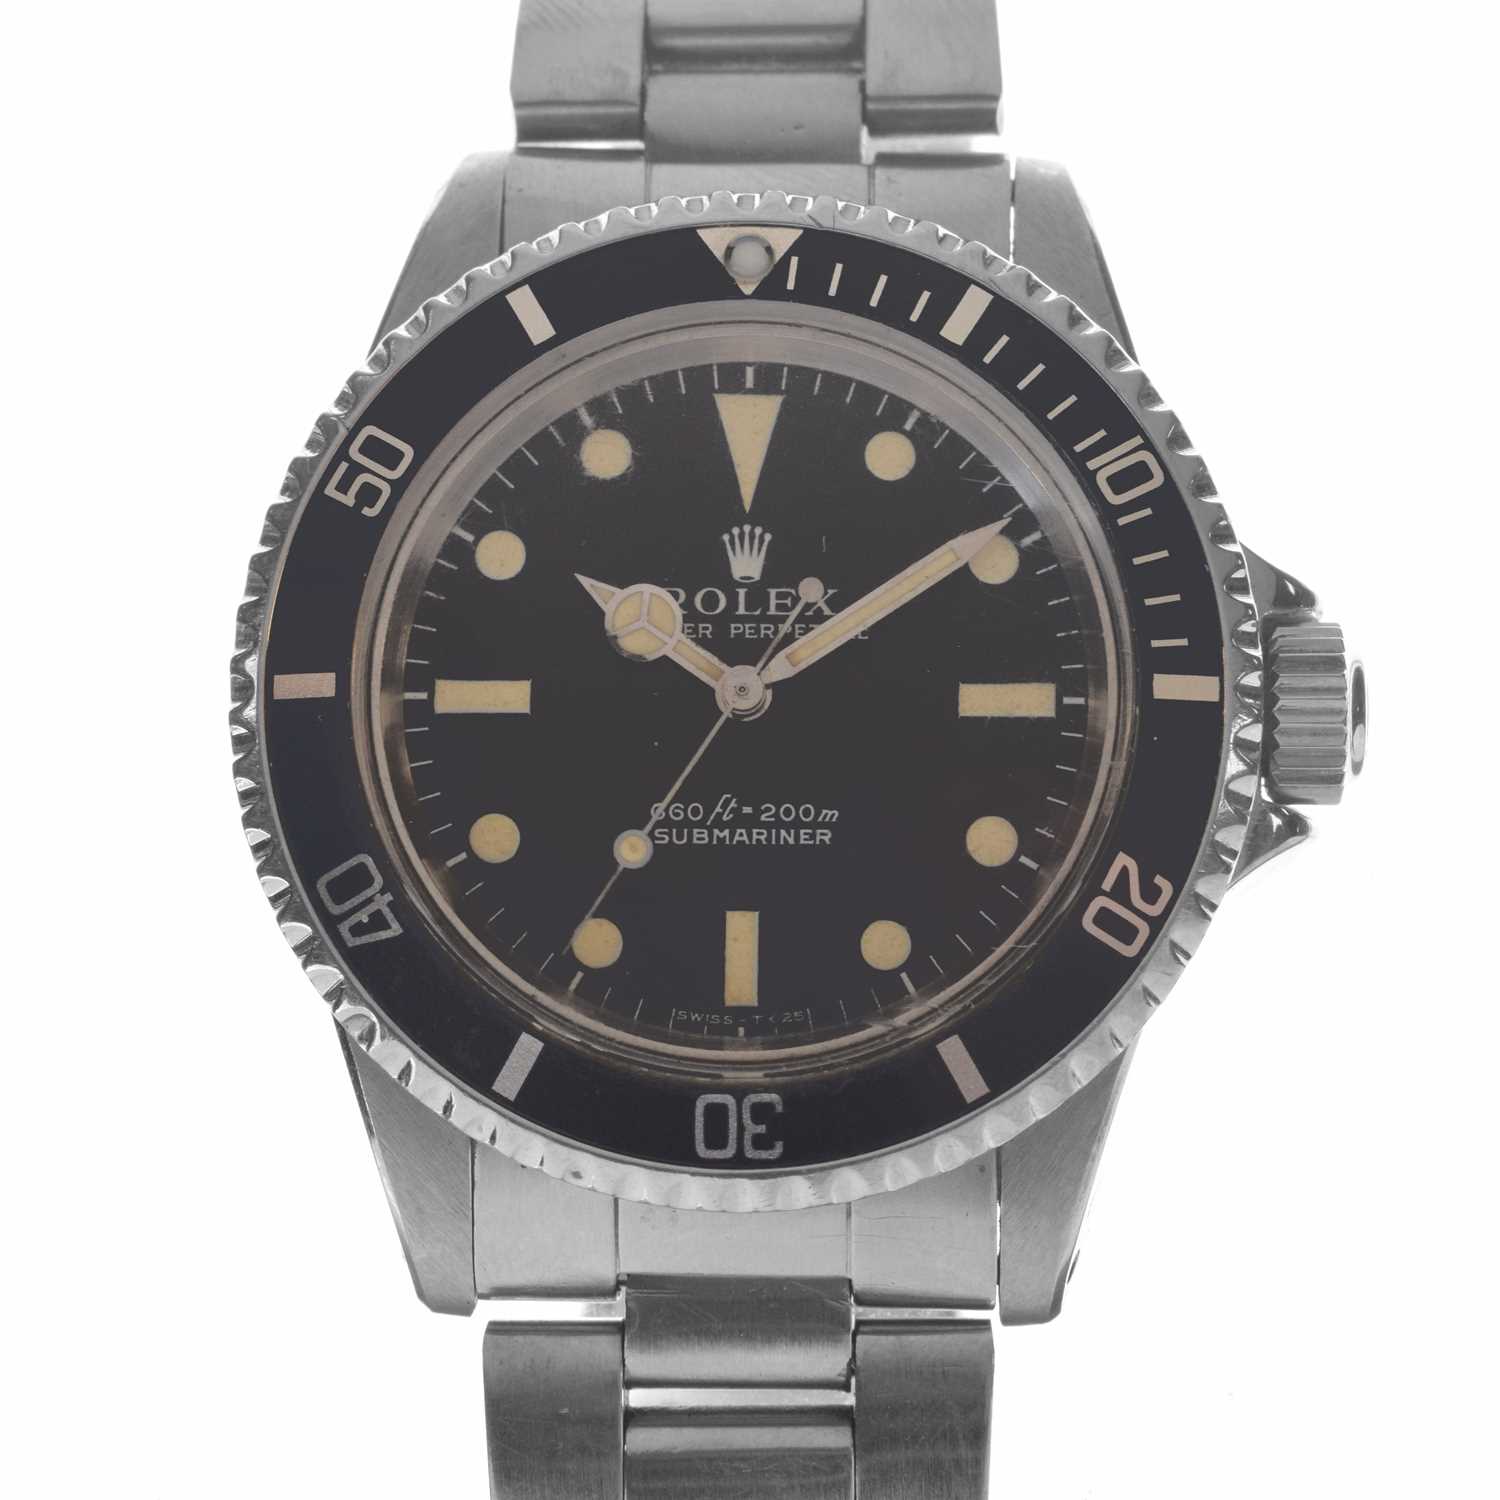 Rolex - Gentleman's Oyster Perpetual Submariner wristwatch, ref.5513 - Image 20 of 38